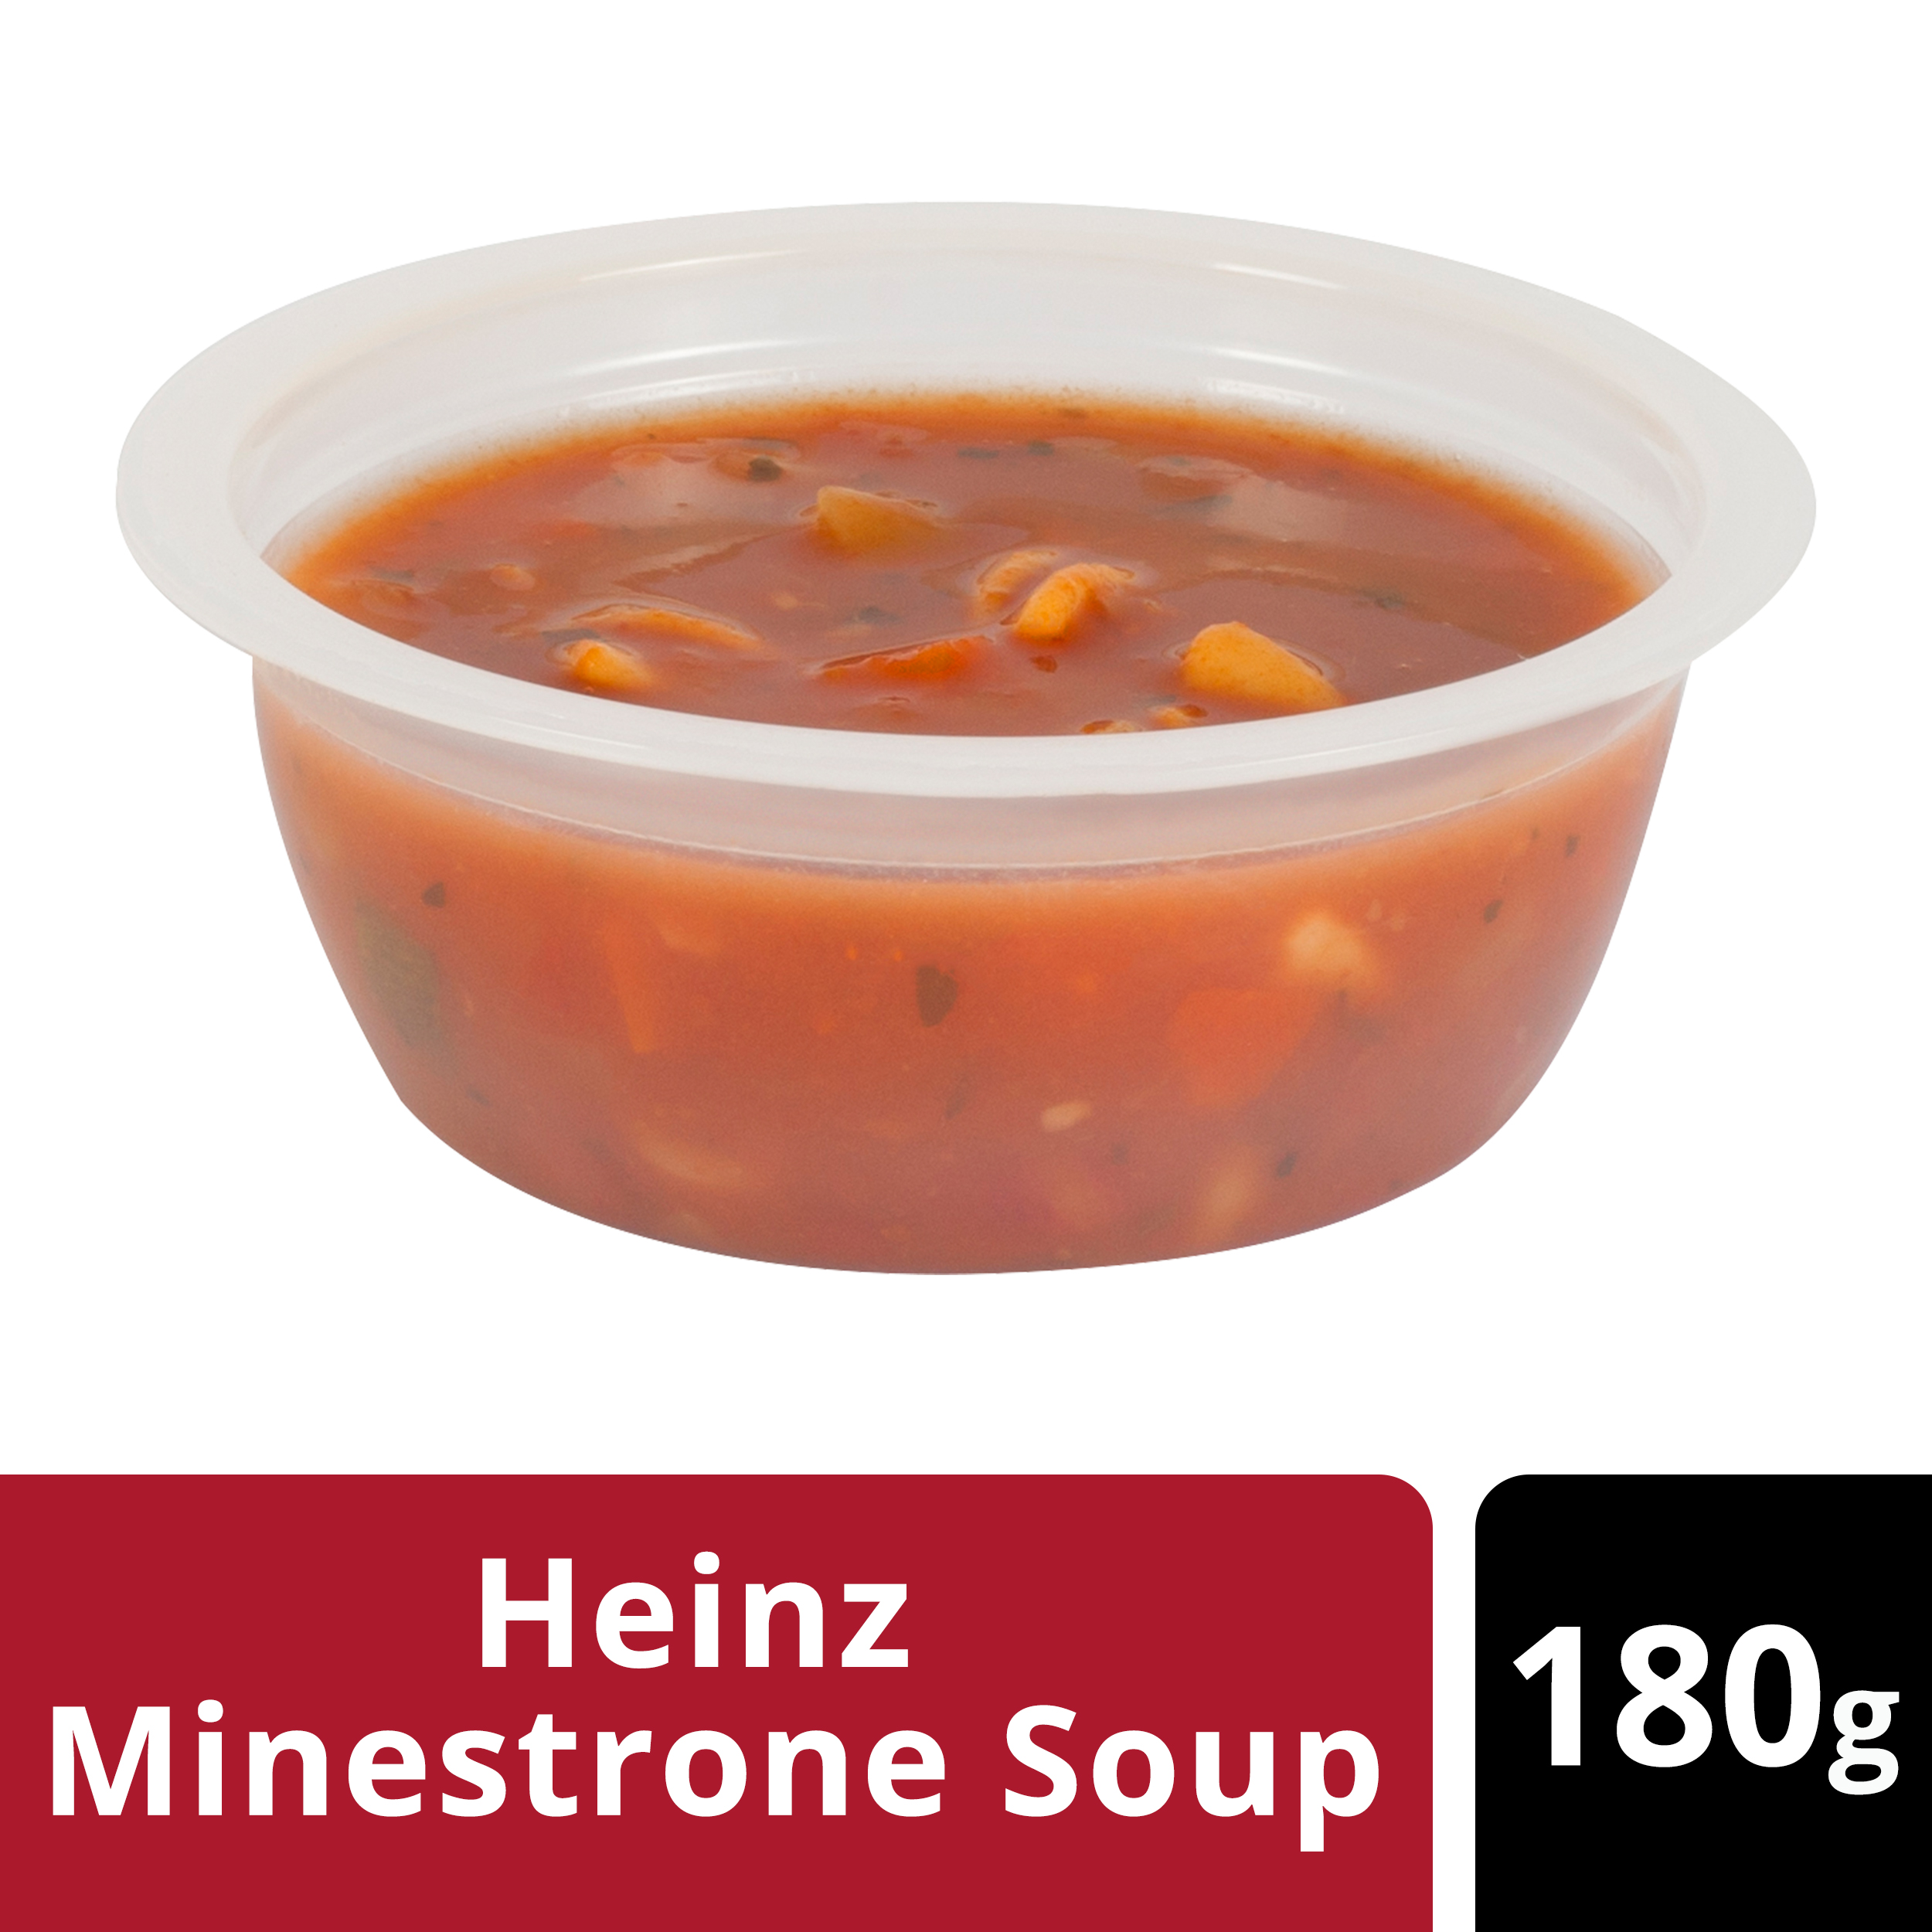  Heinz® Minestrone Soup Portion 180g 